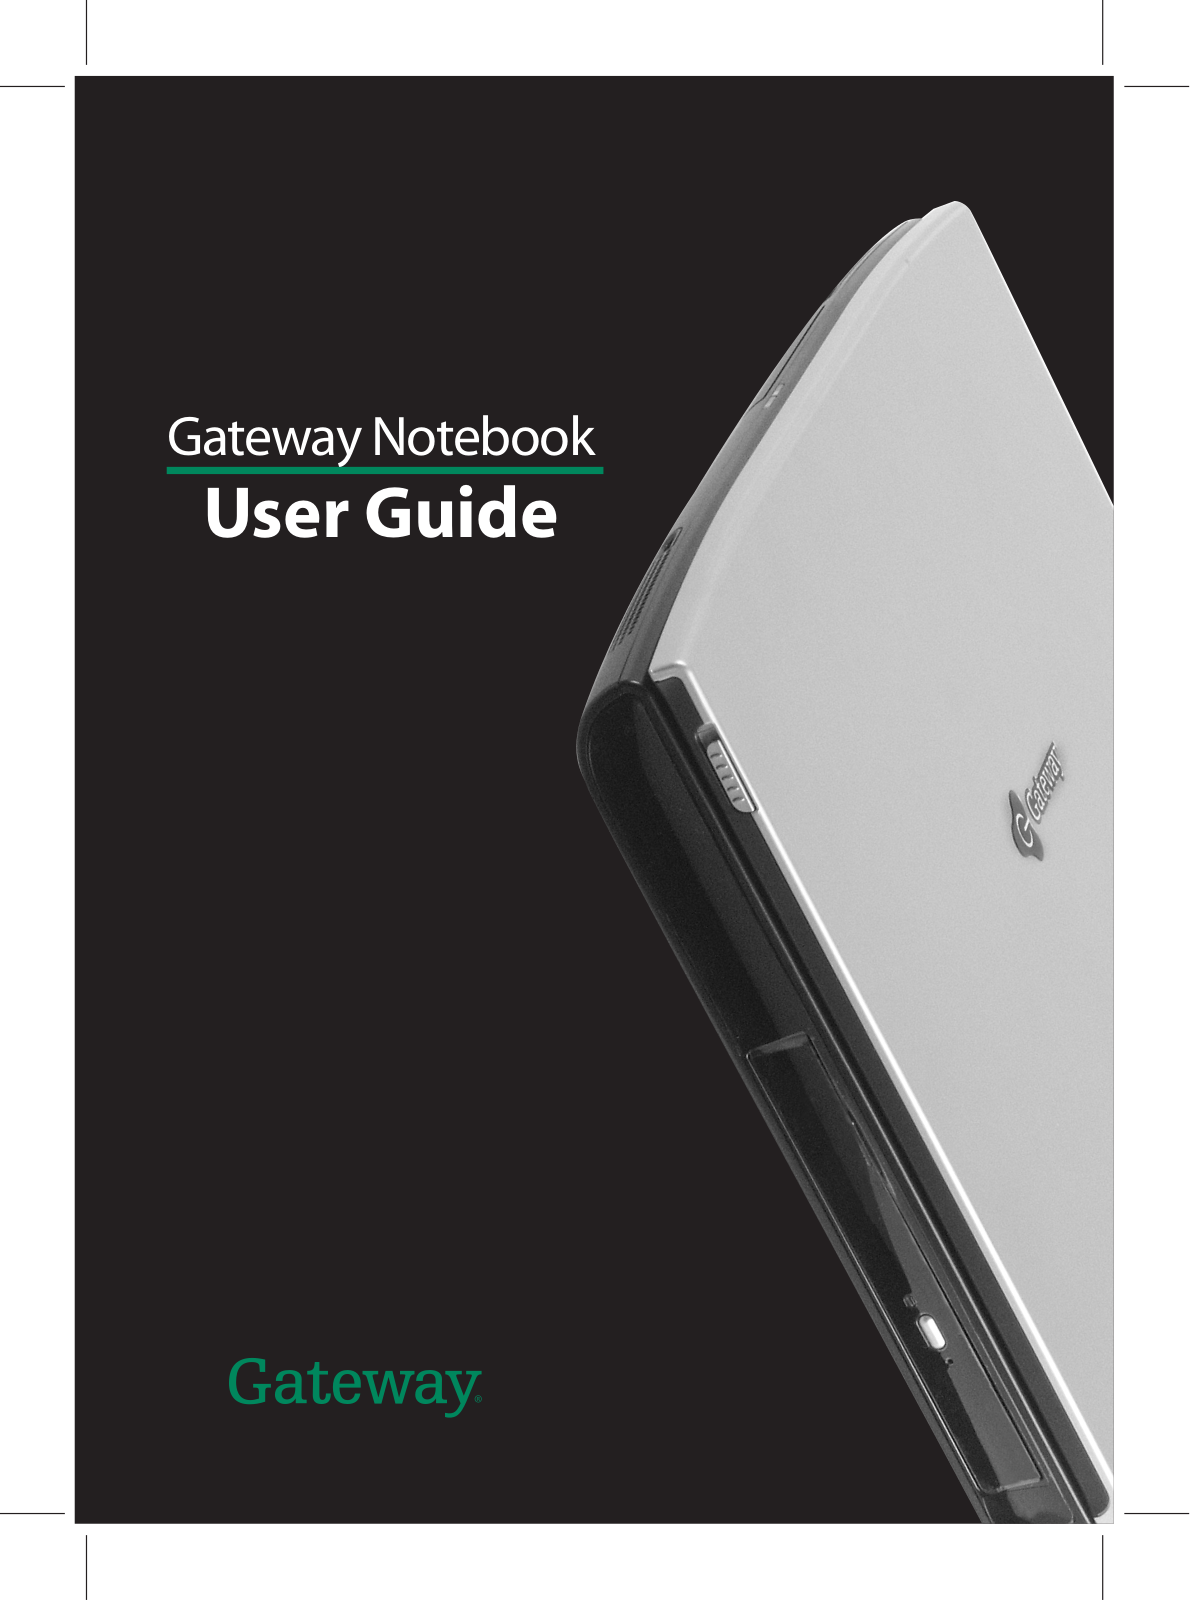 Gateway 7110, 7210, 7300, 7320, 7330 Owner's Manual